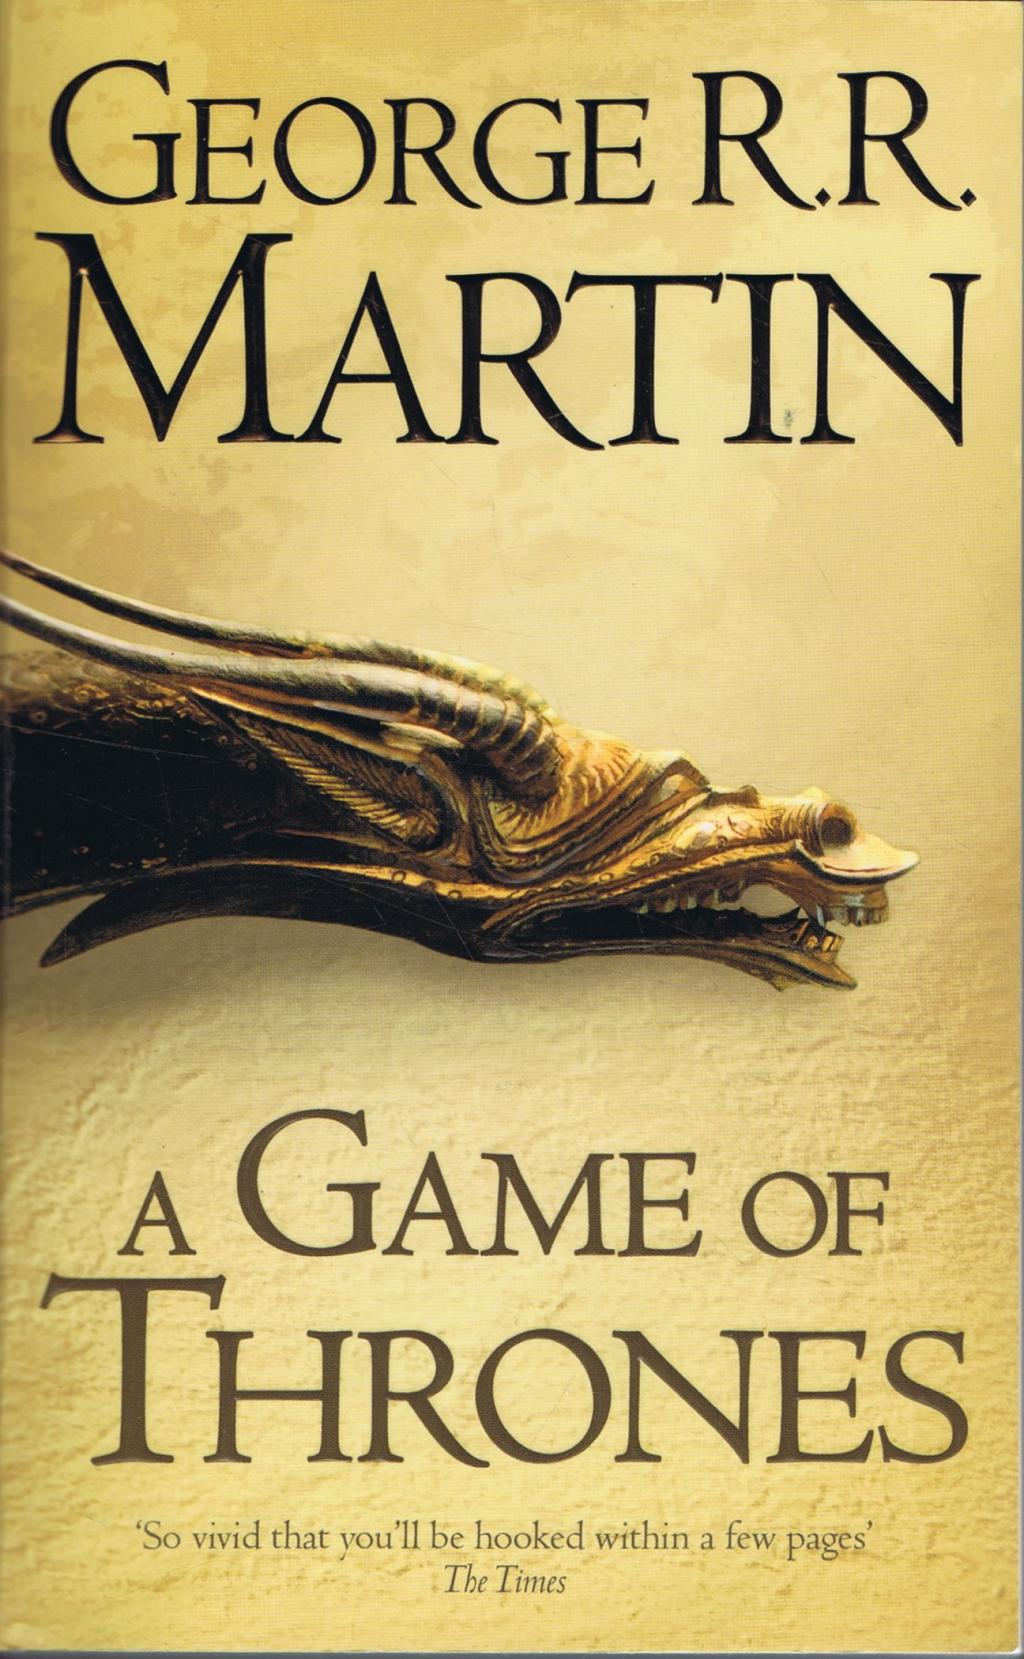 George RR Martin - Game of Thrones Danmark